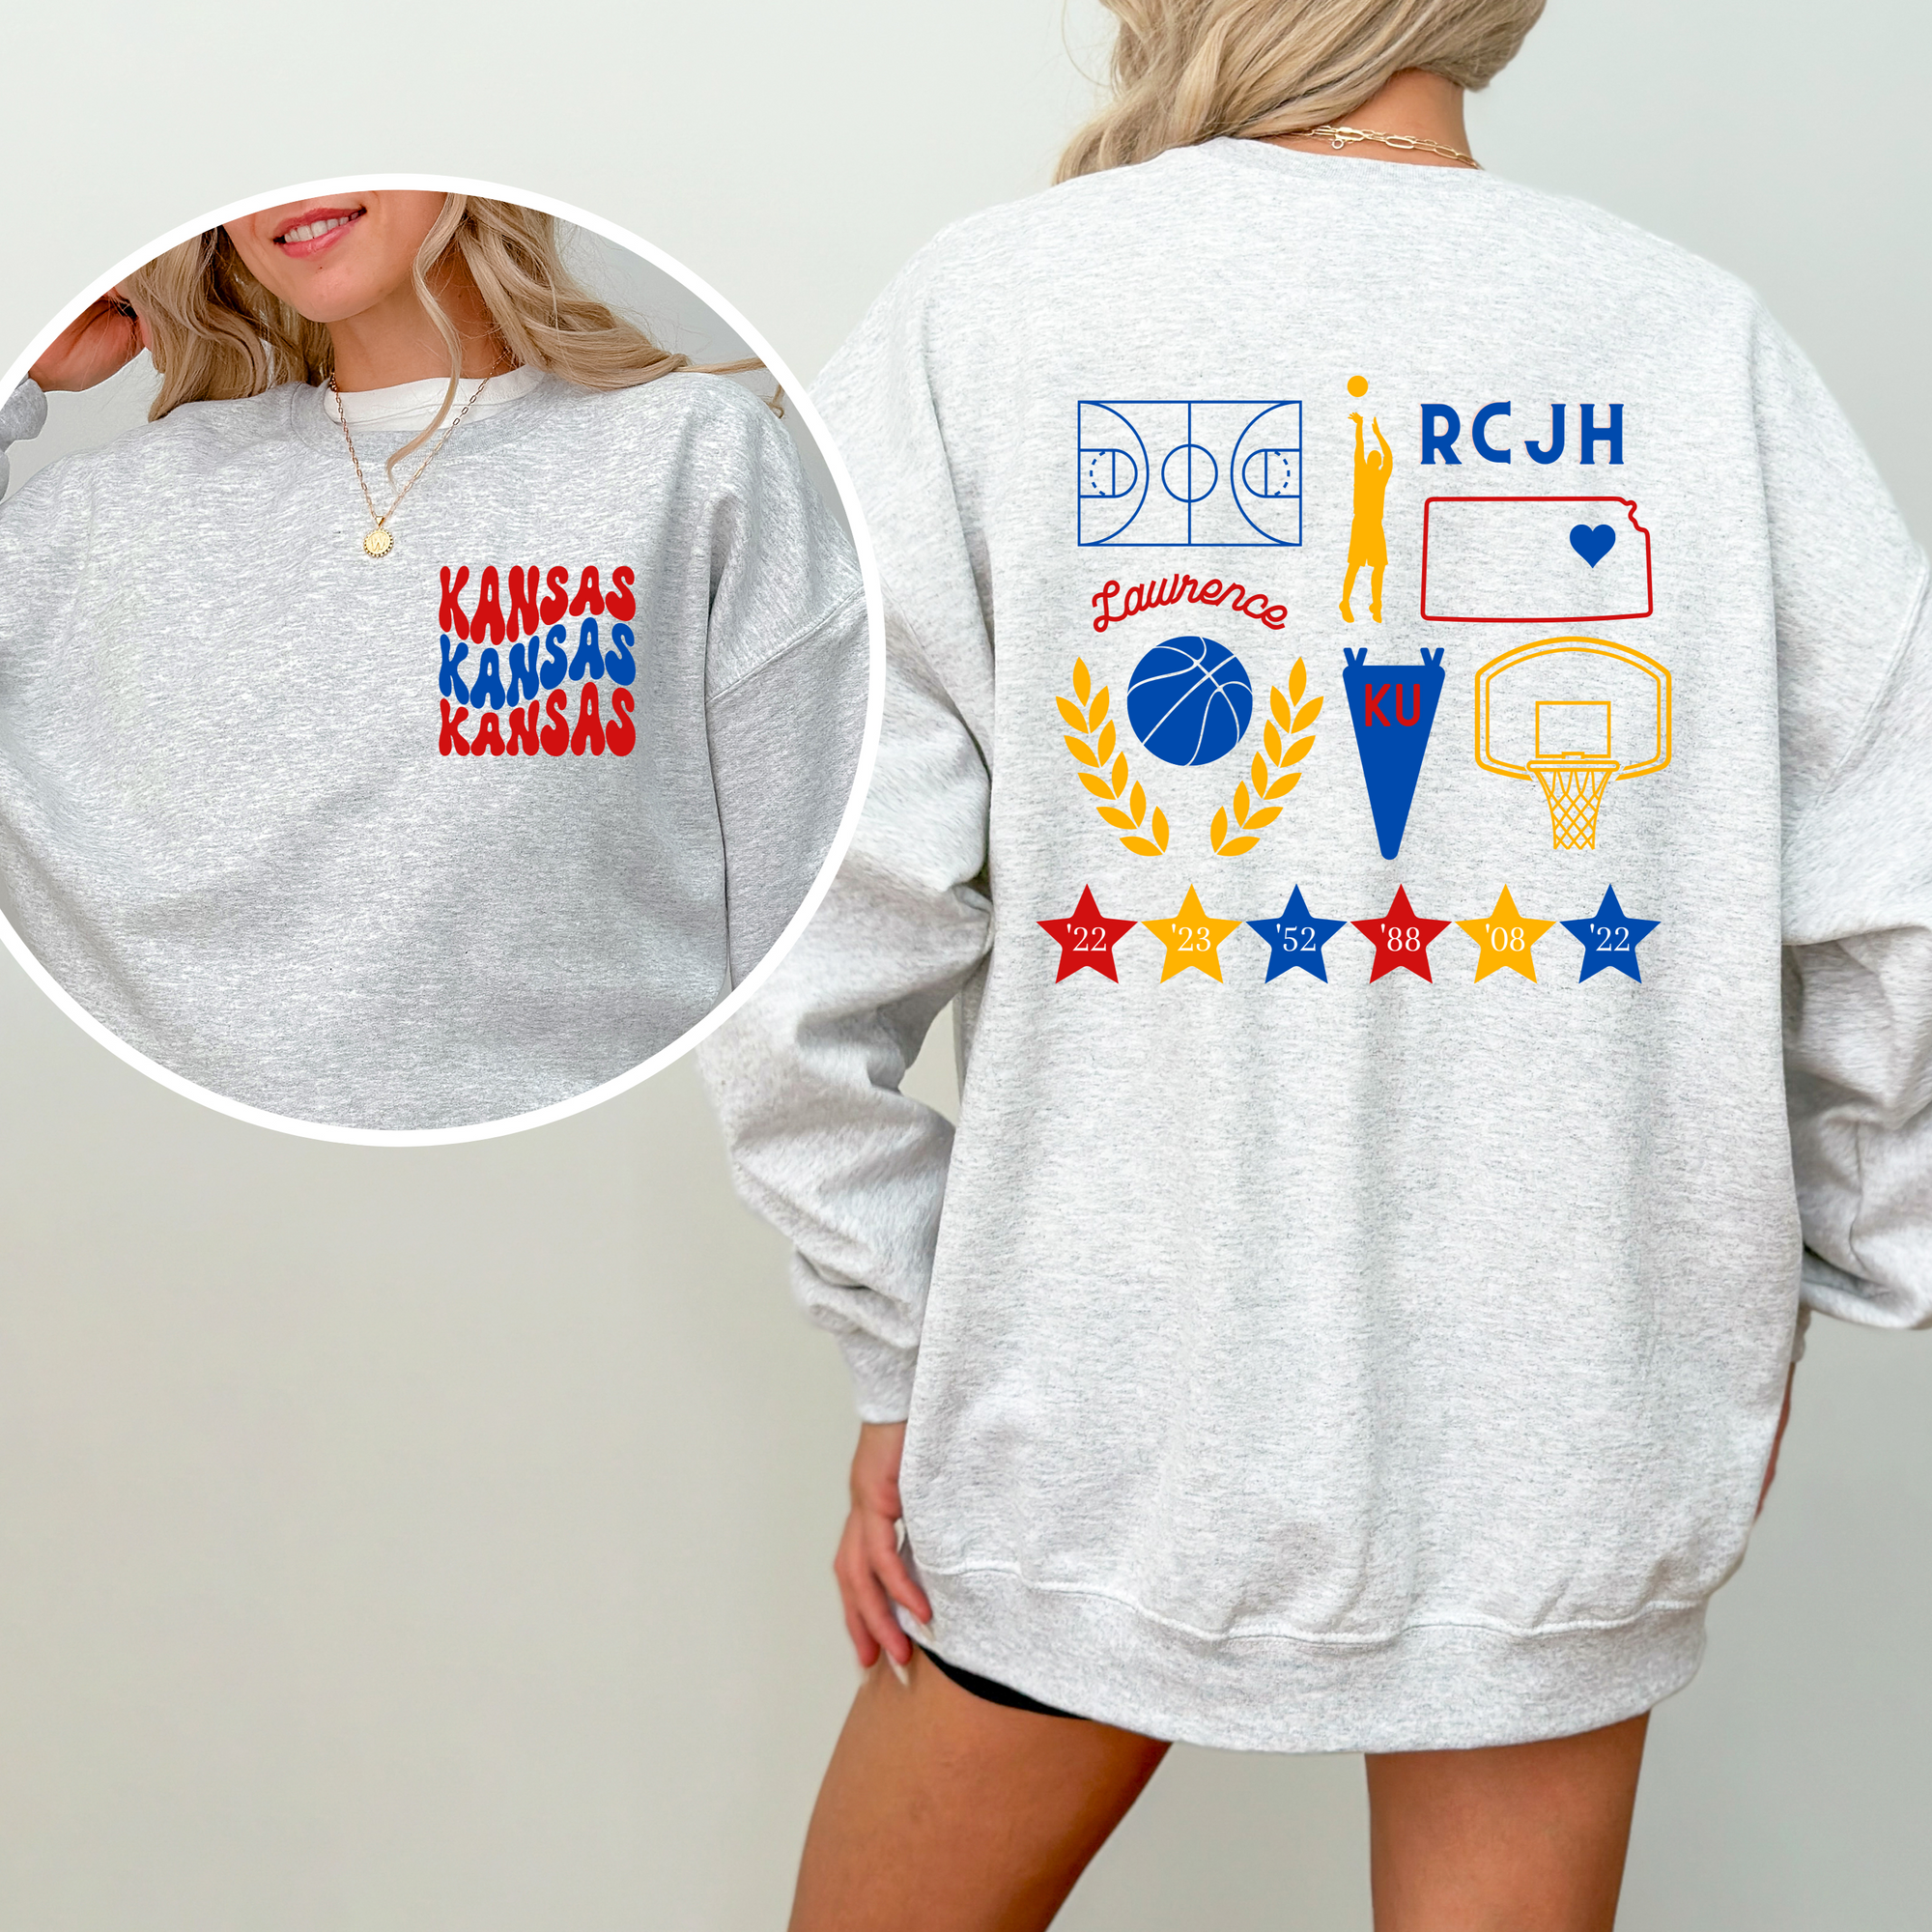 Kansas RCJH Retro Tee OR Sweatshirt